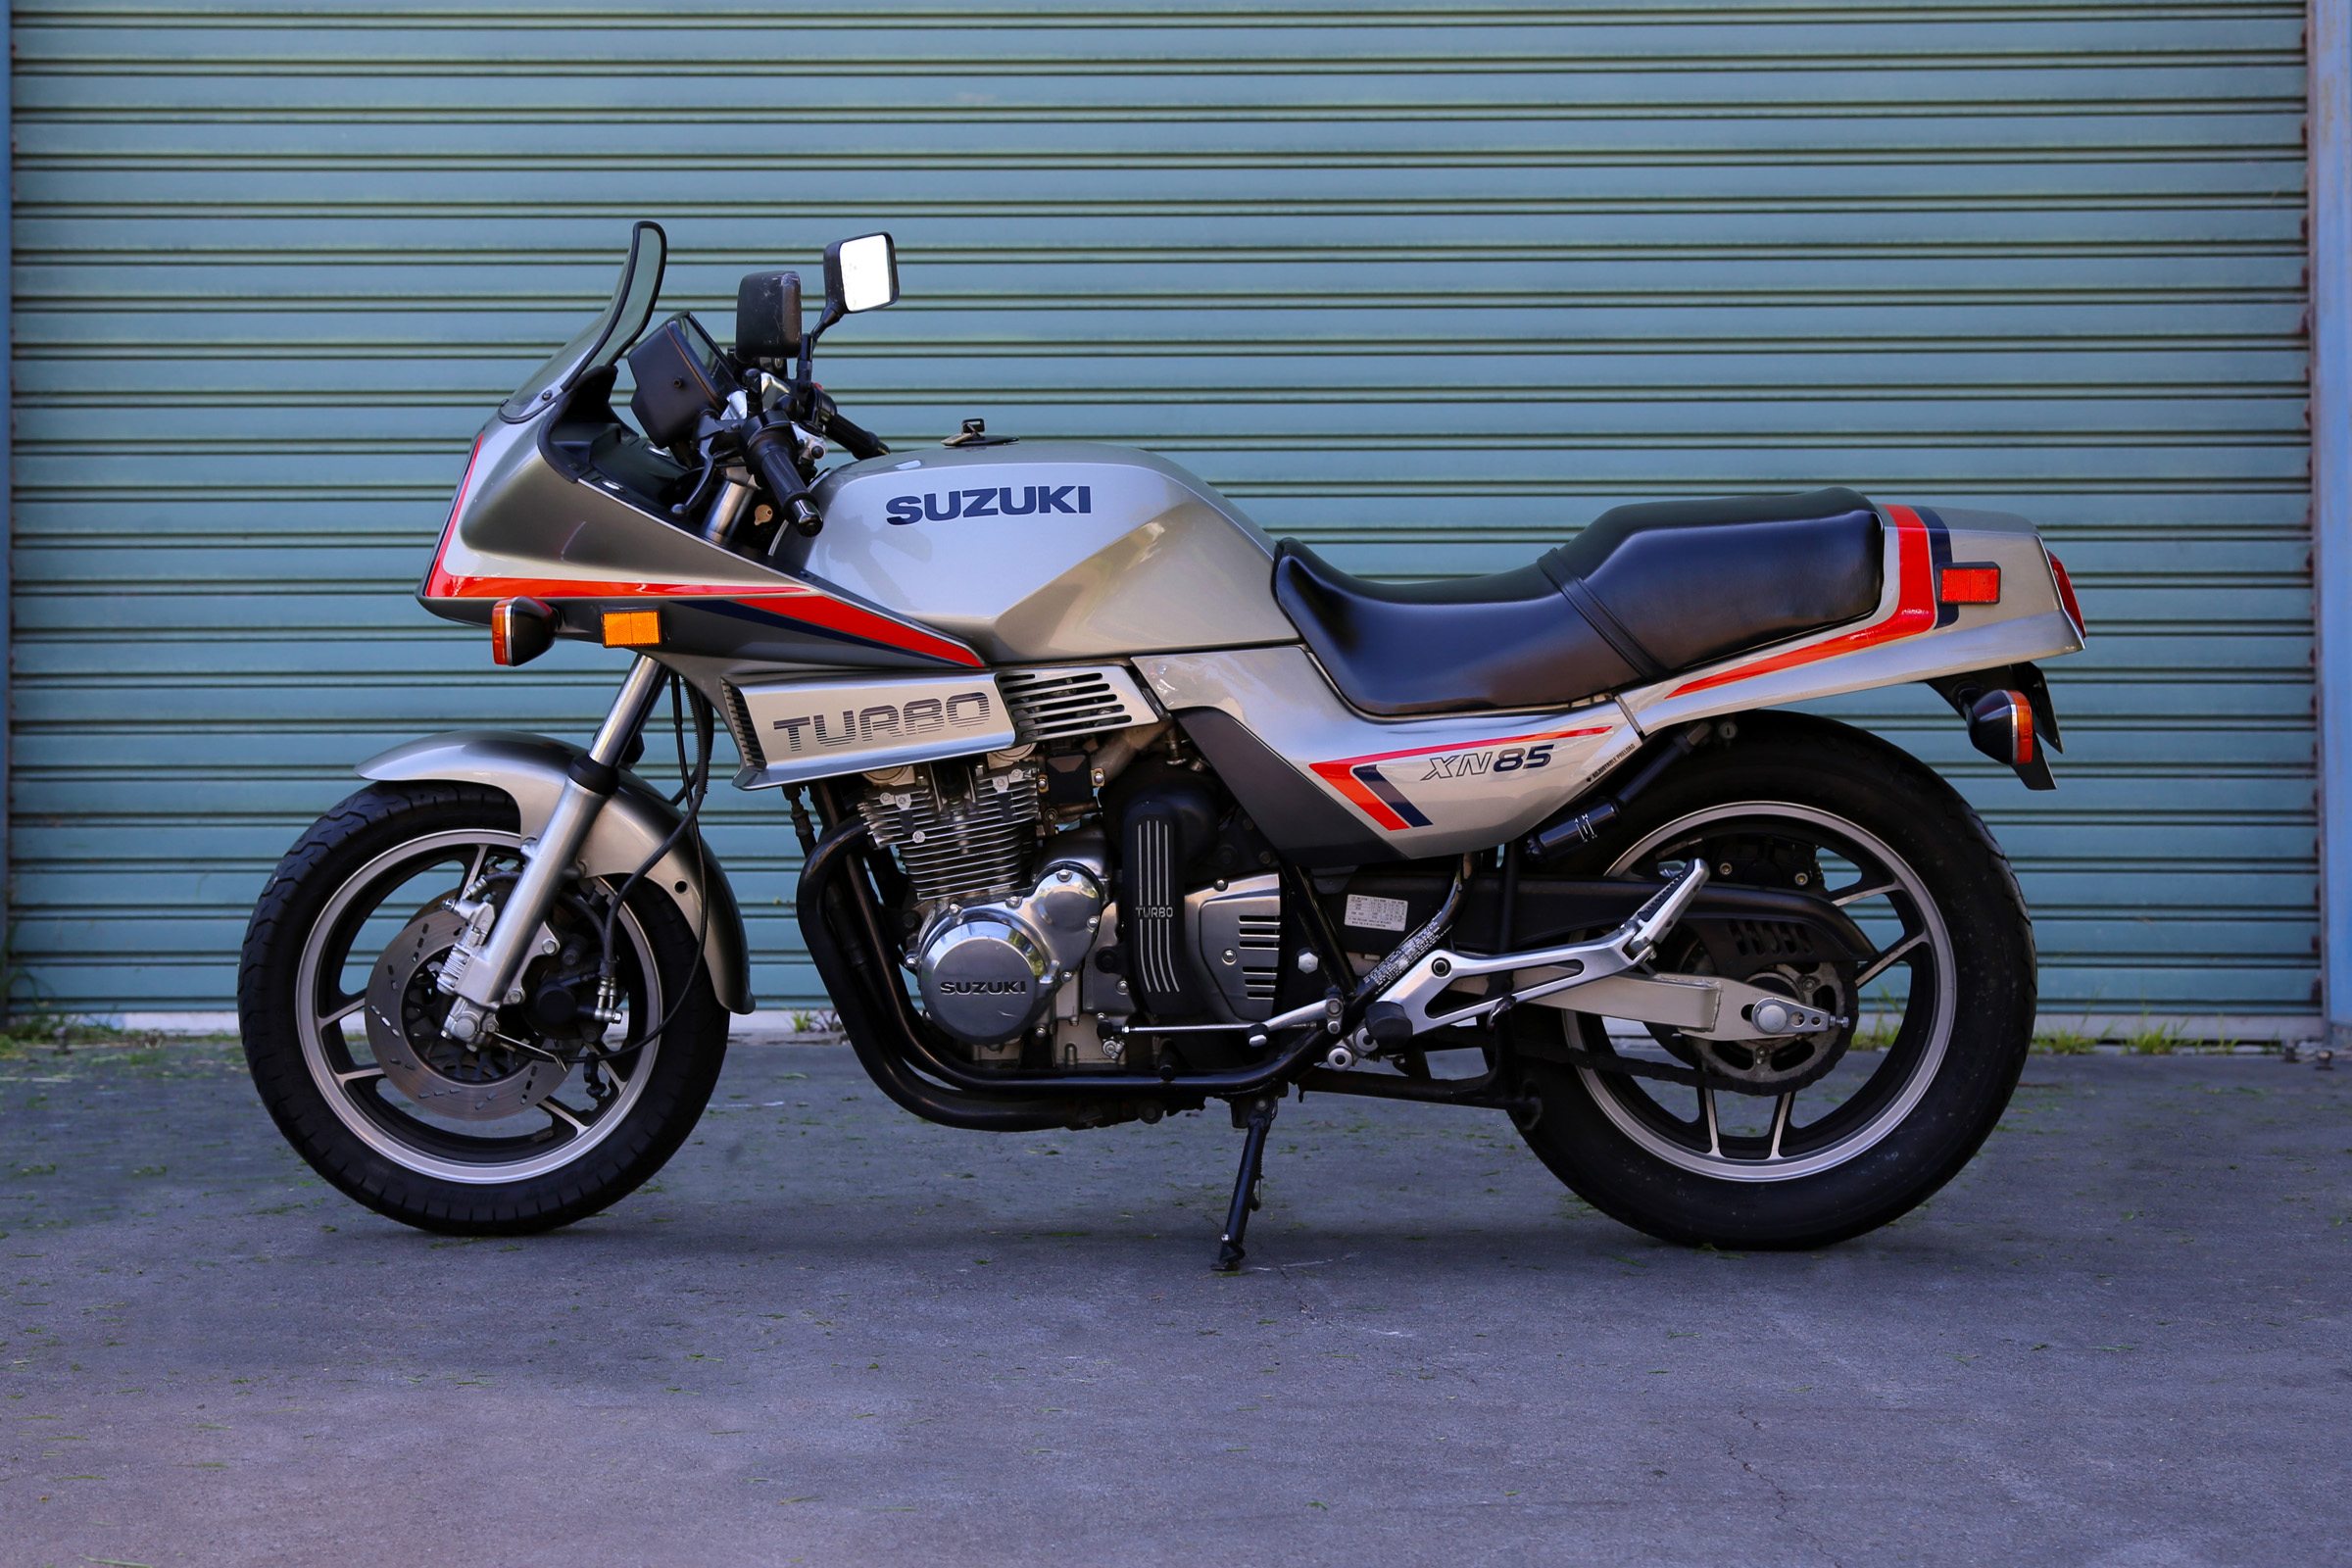 1983 Suzuki XN85 Turbo cls